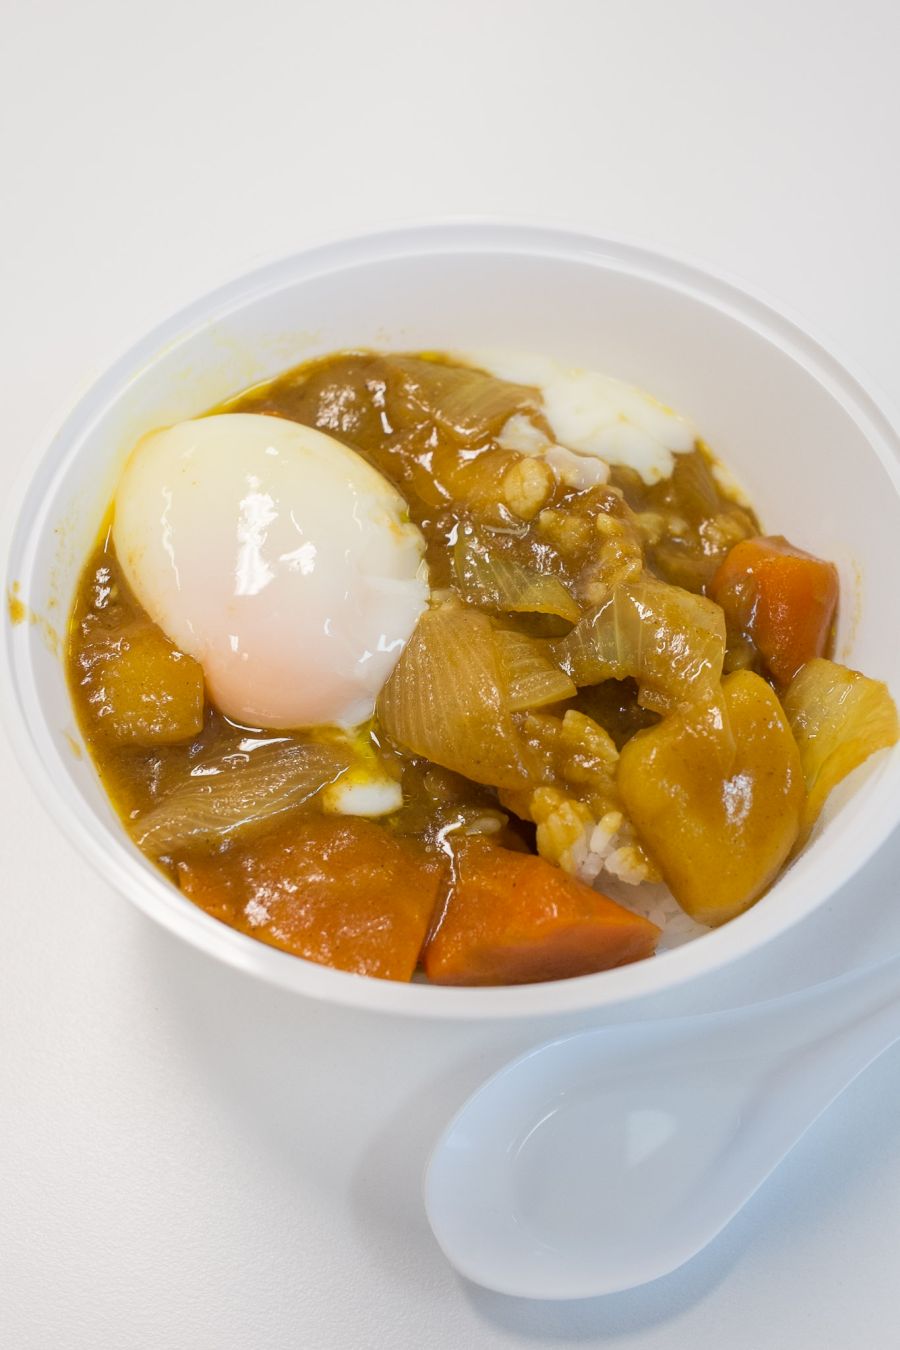 Ontama curry (AU$7, medium size)